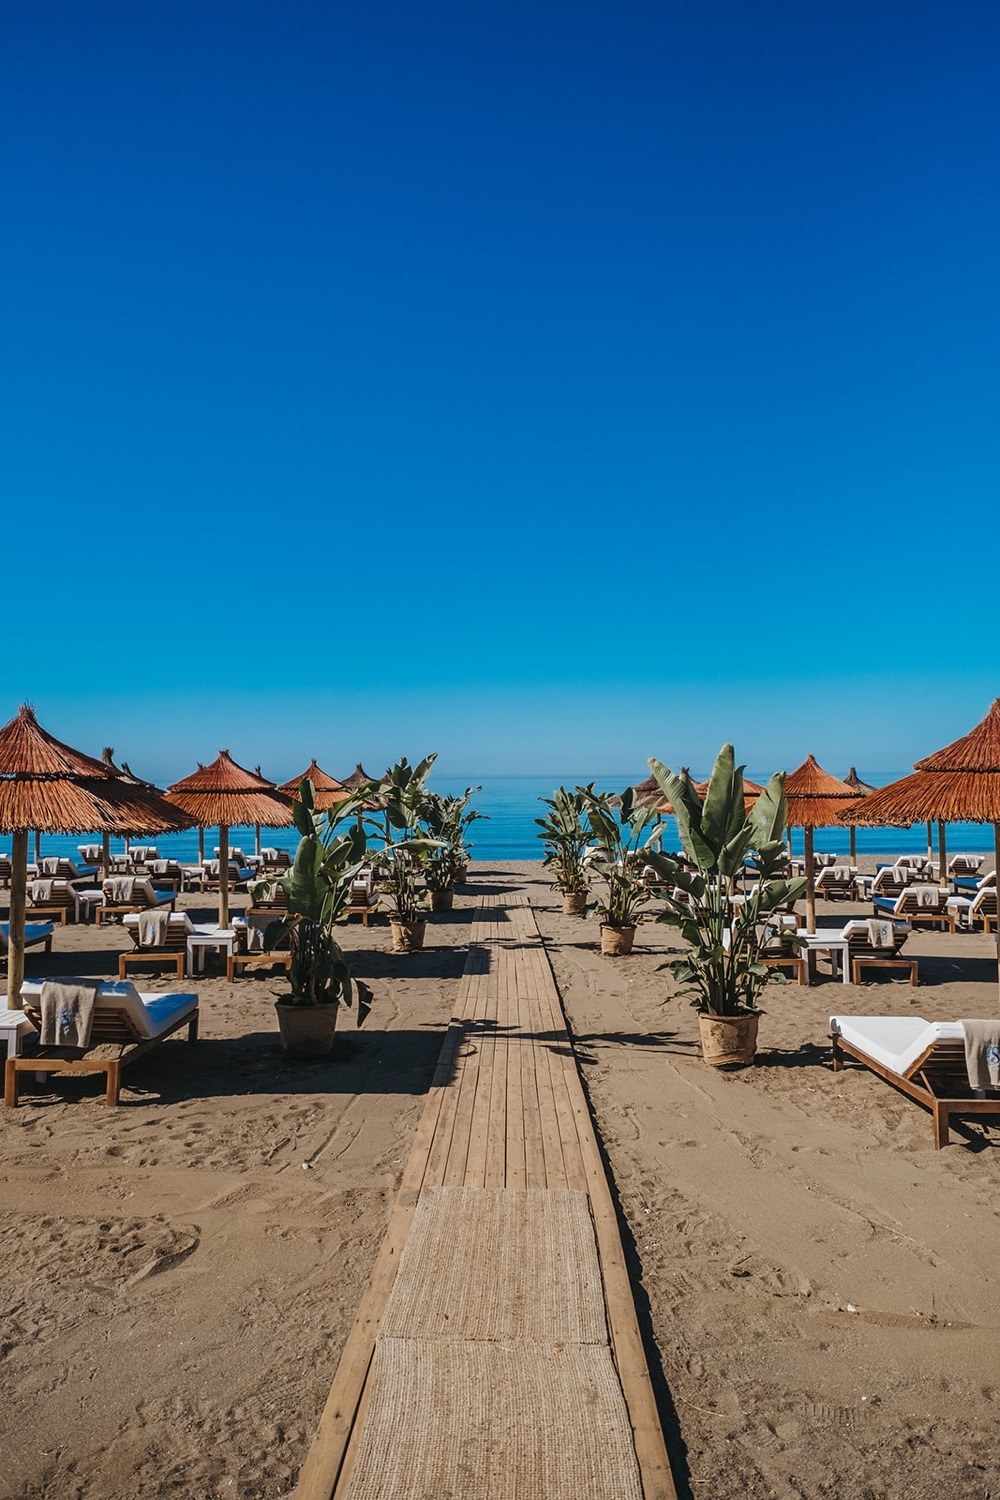 imagen 6 de Salduna Beach, verano azul en Marbella.